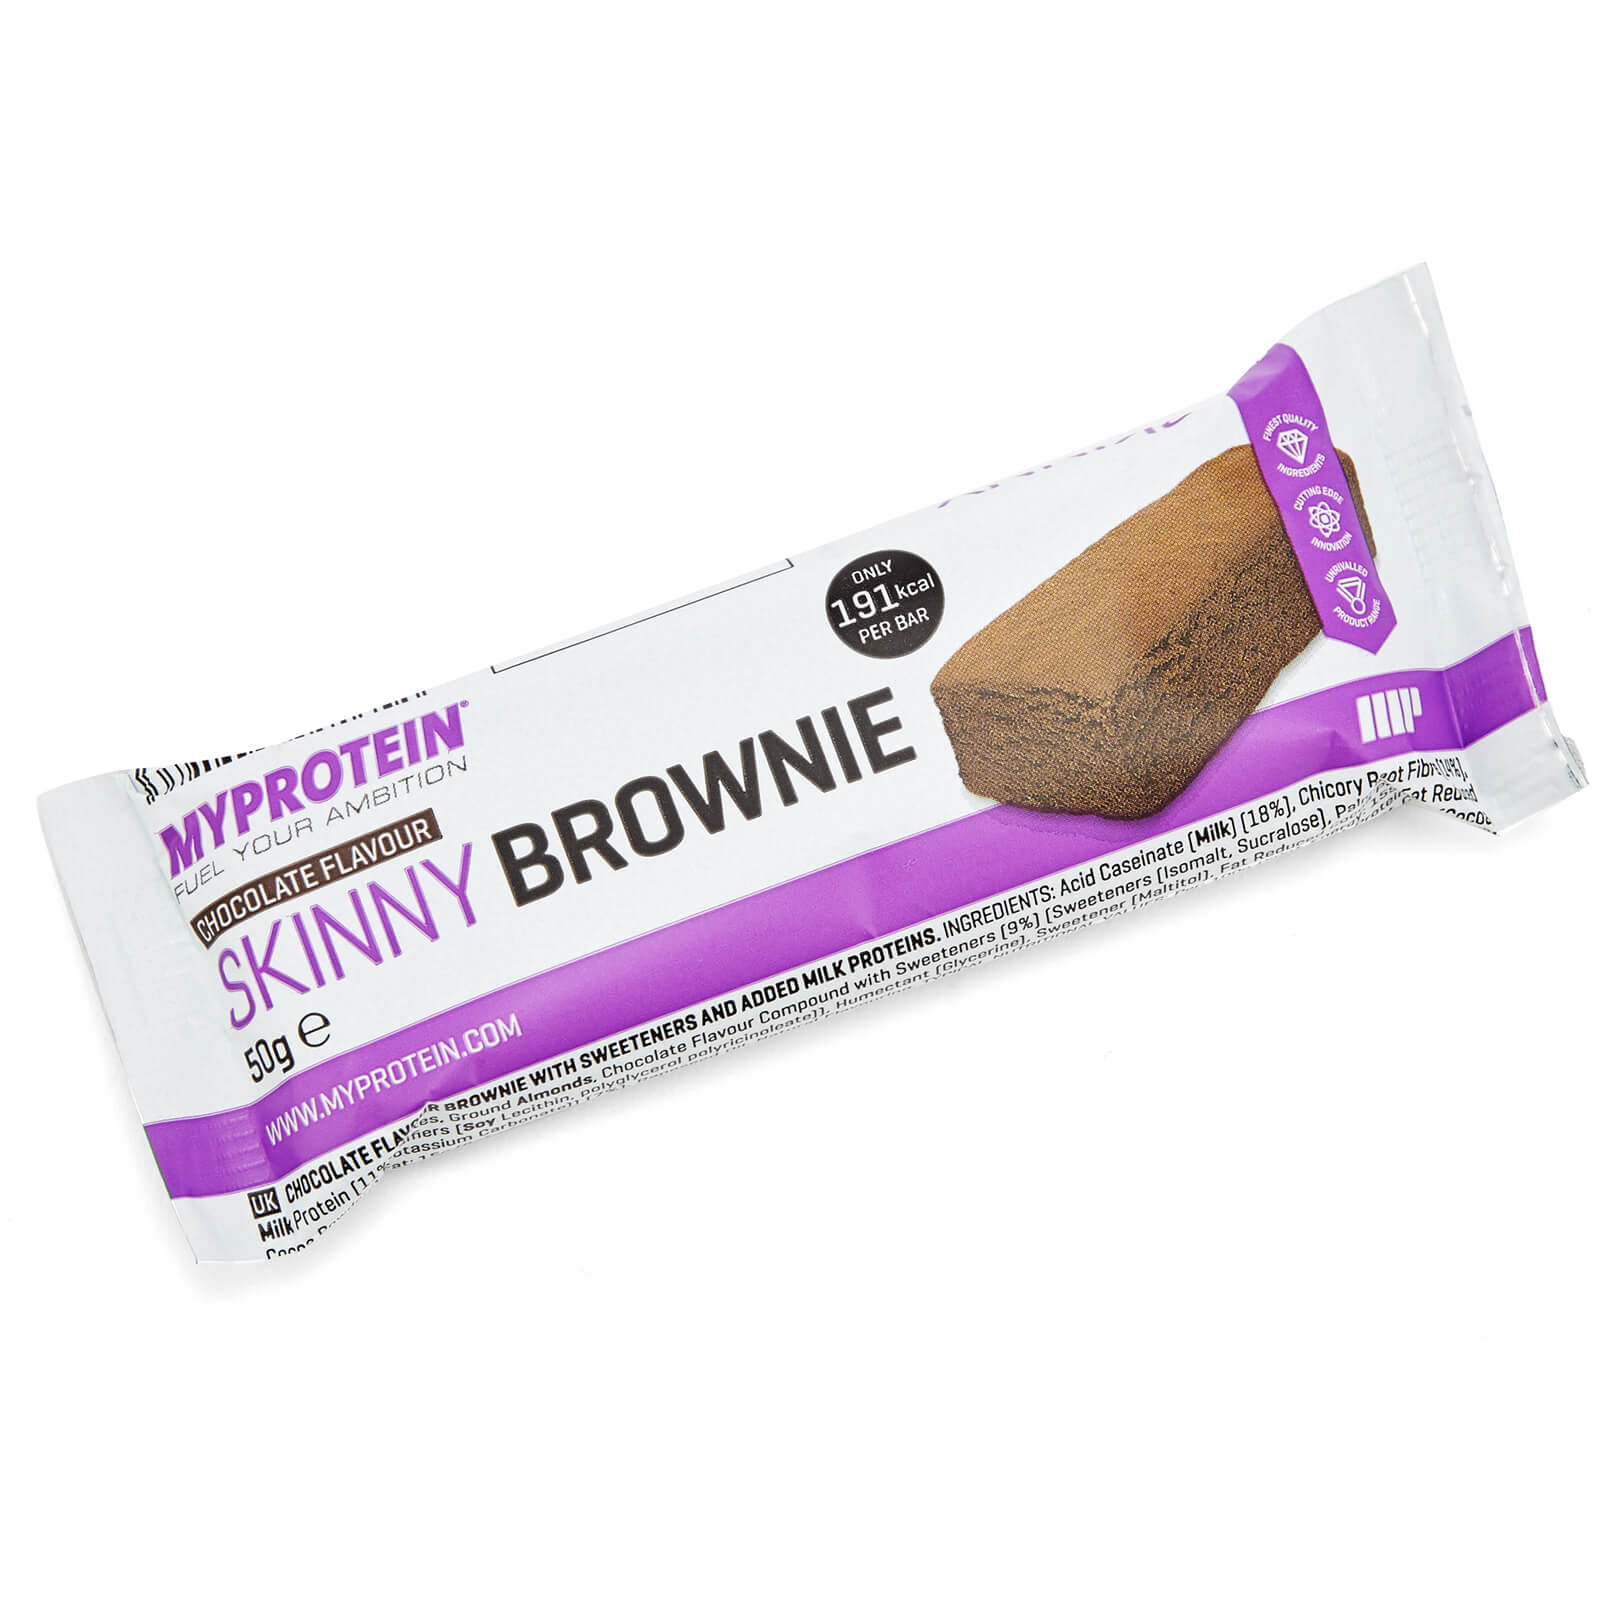 Brownie allégé (Échantillon) - 50g - Chocolat